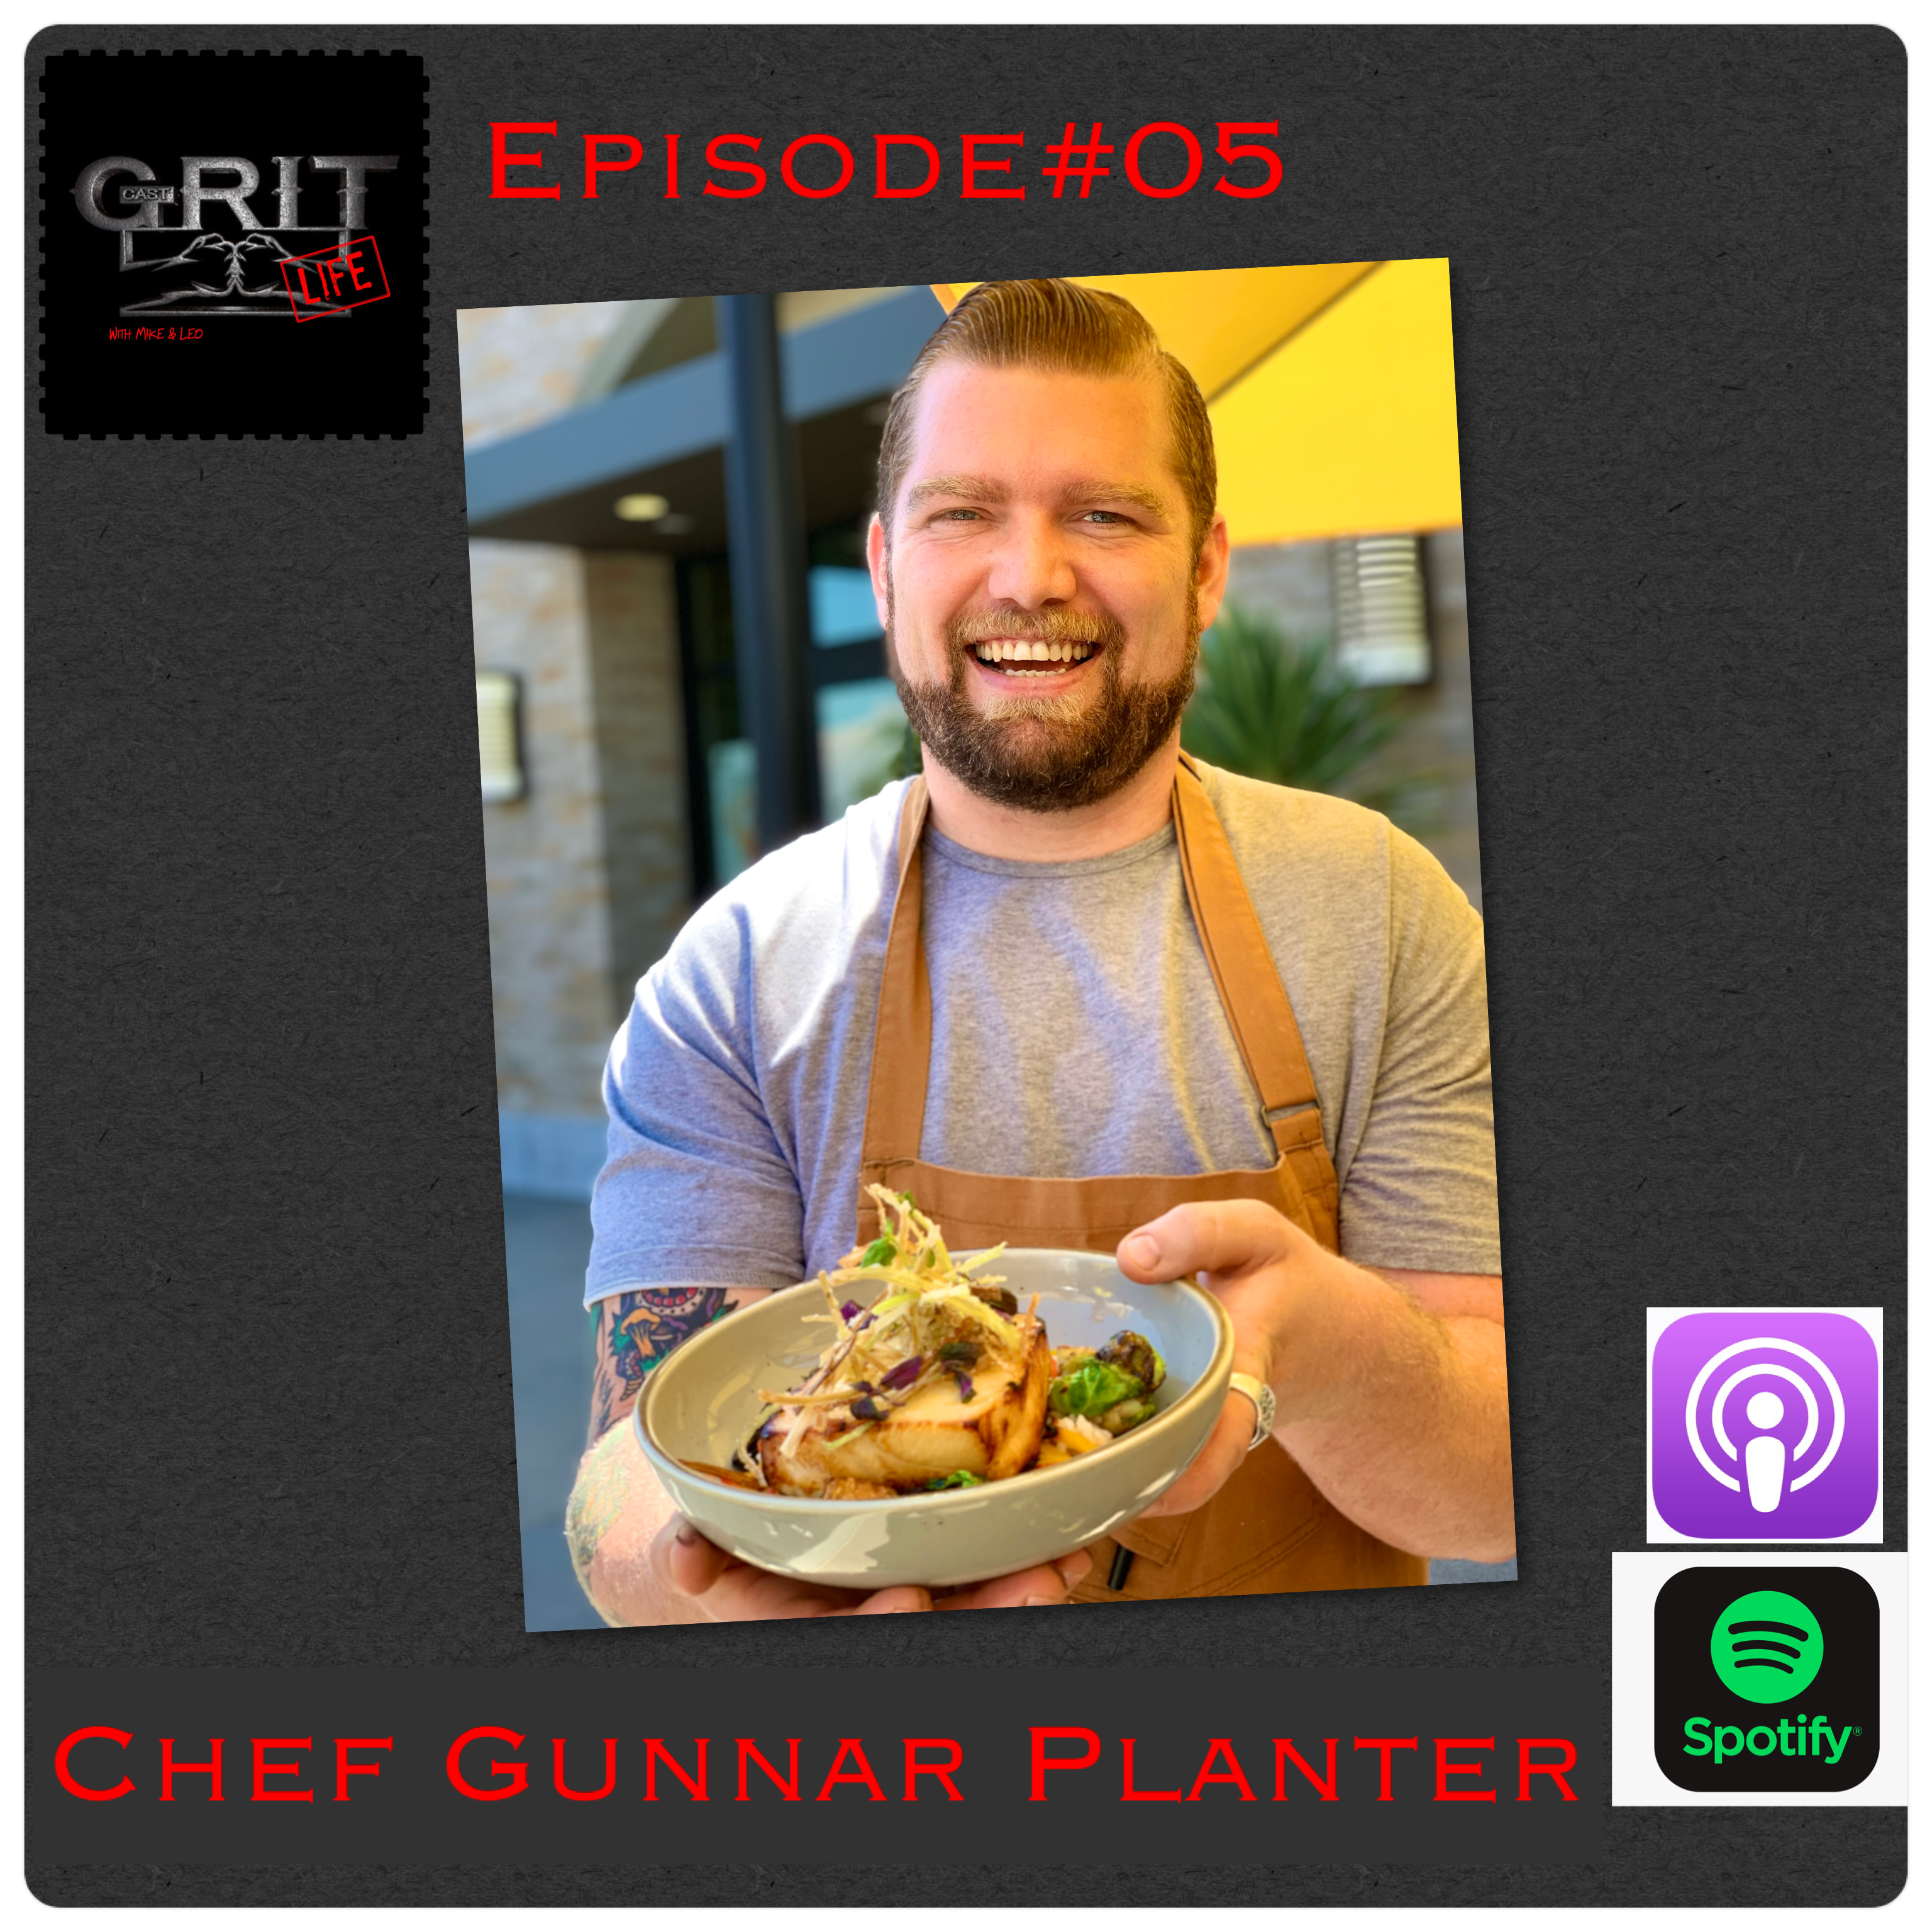 Episode #5: Chef Gunnar Planter